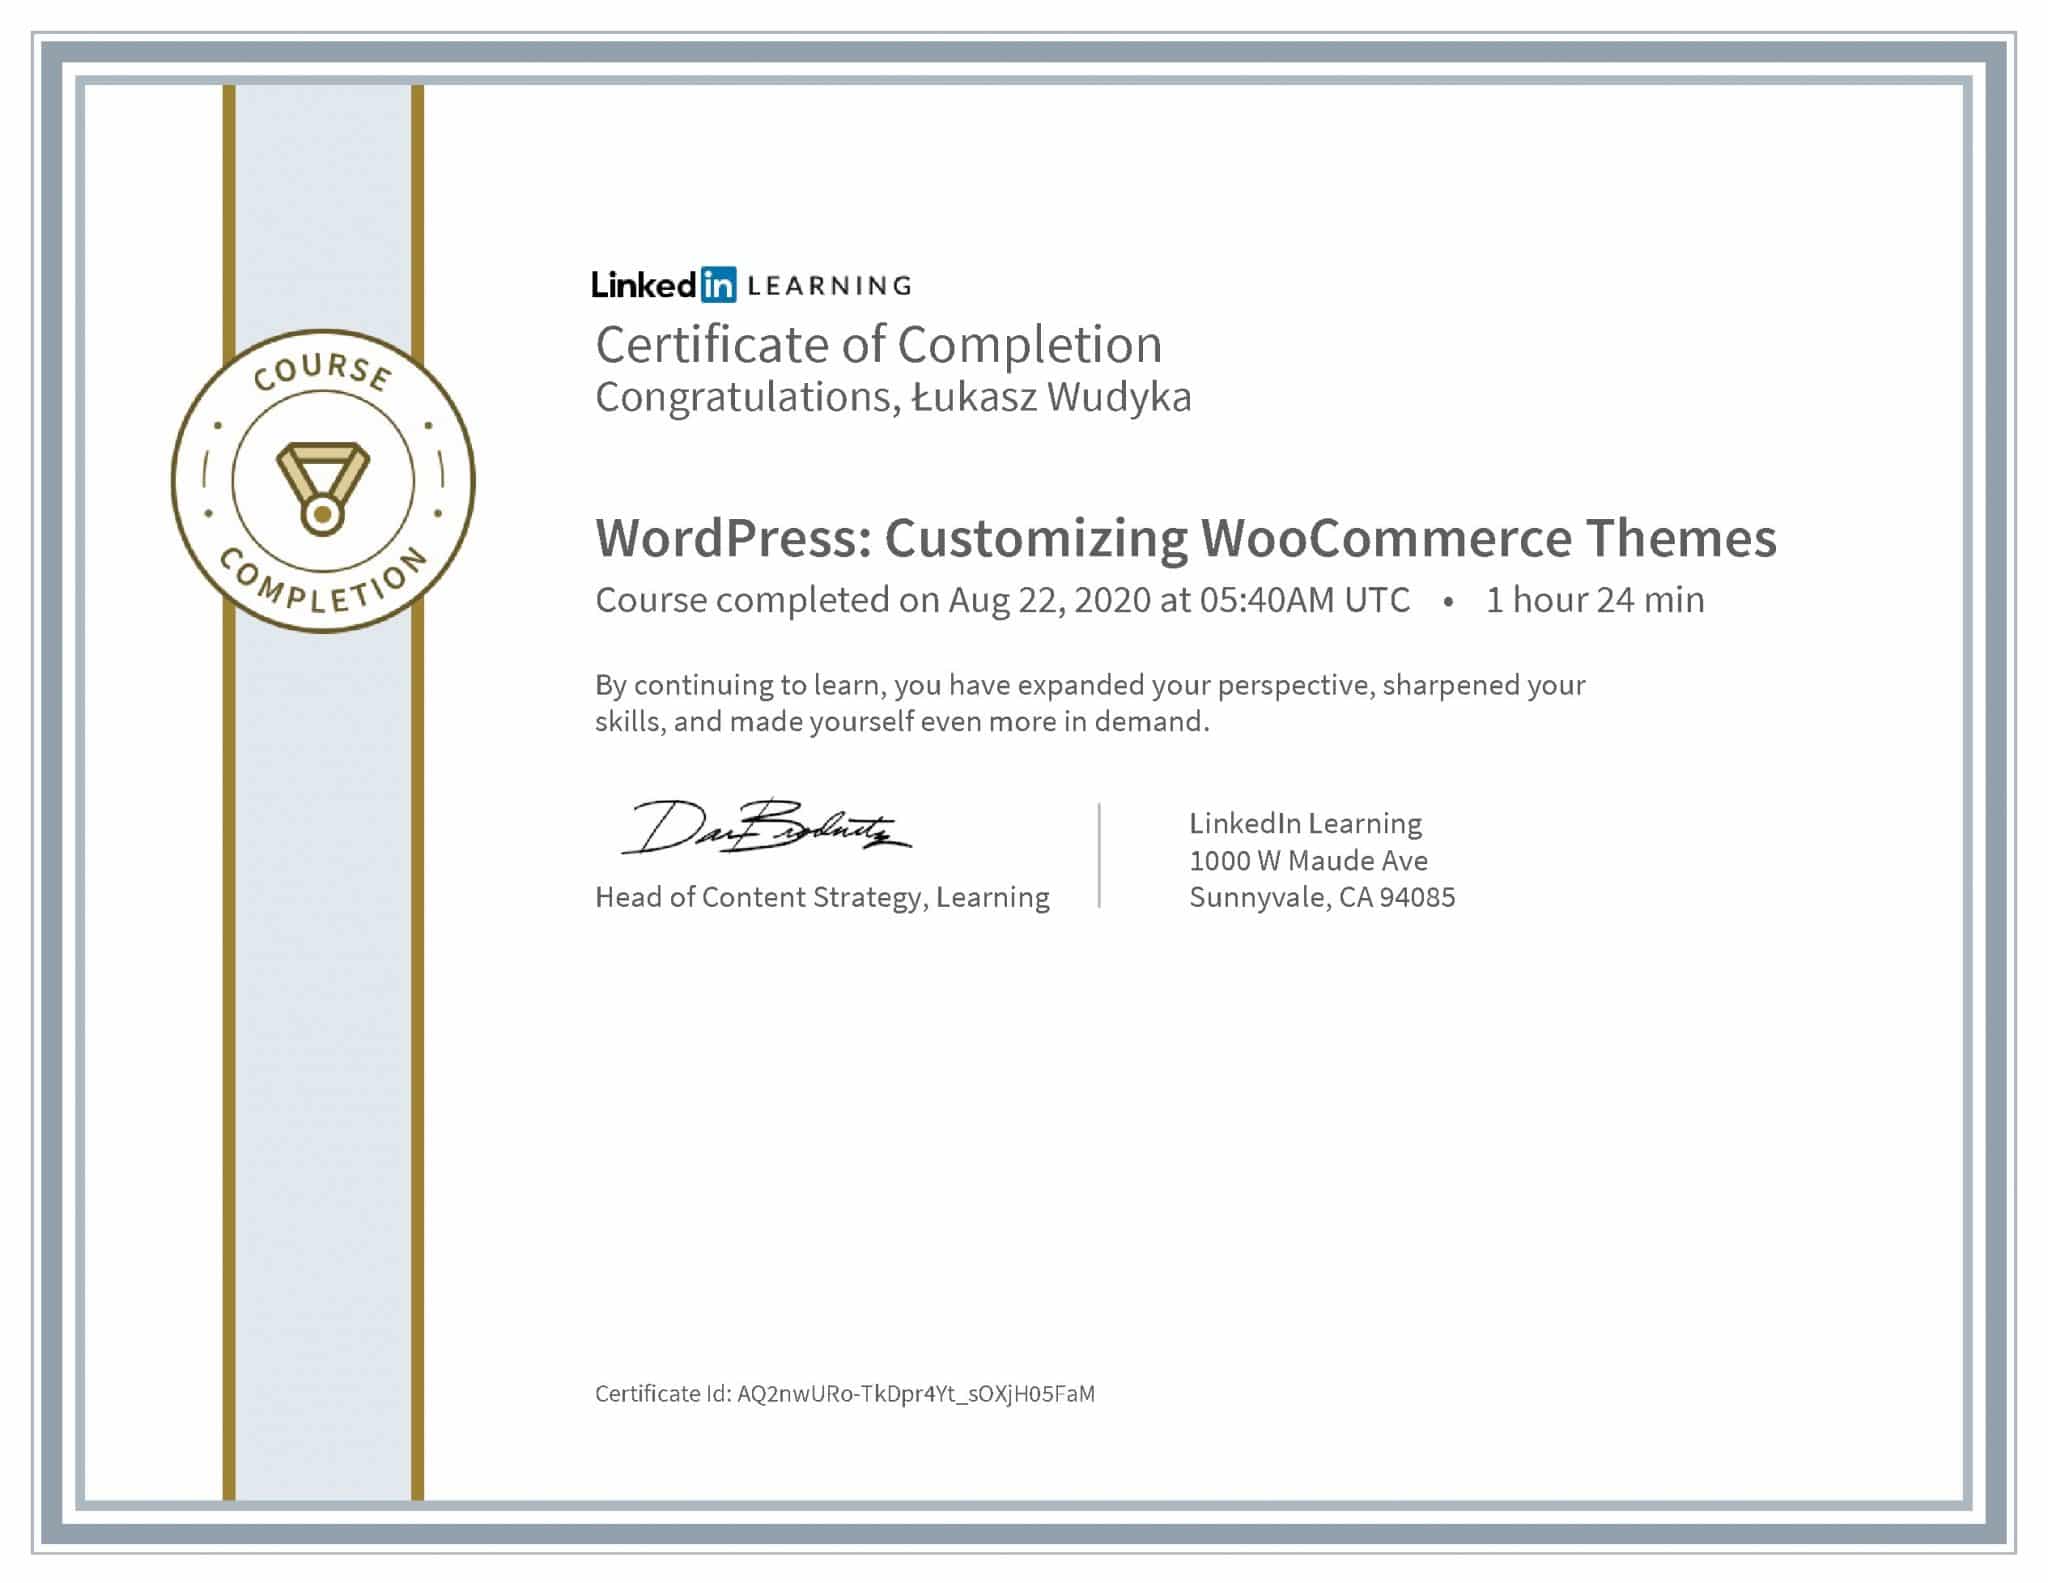 Łukasz Wudyka certyfikat LinkedIn WordPress: Customizing WooCommerce Themes